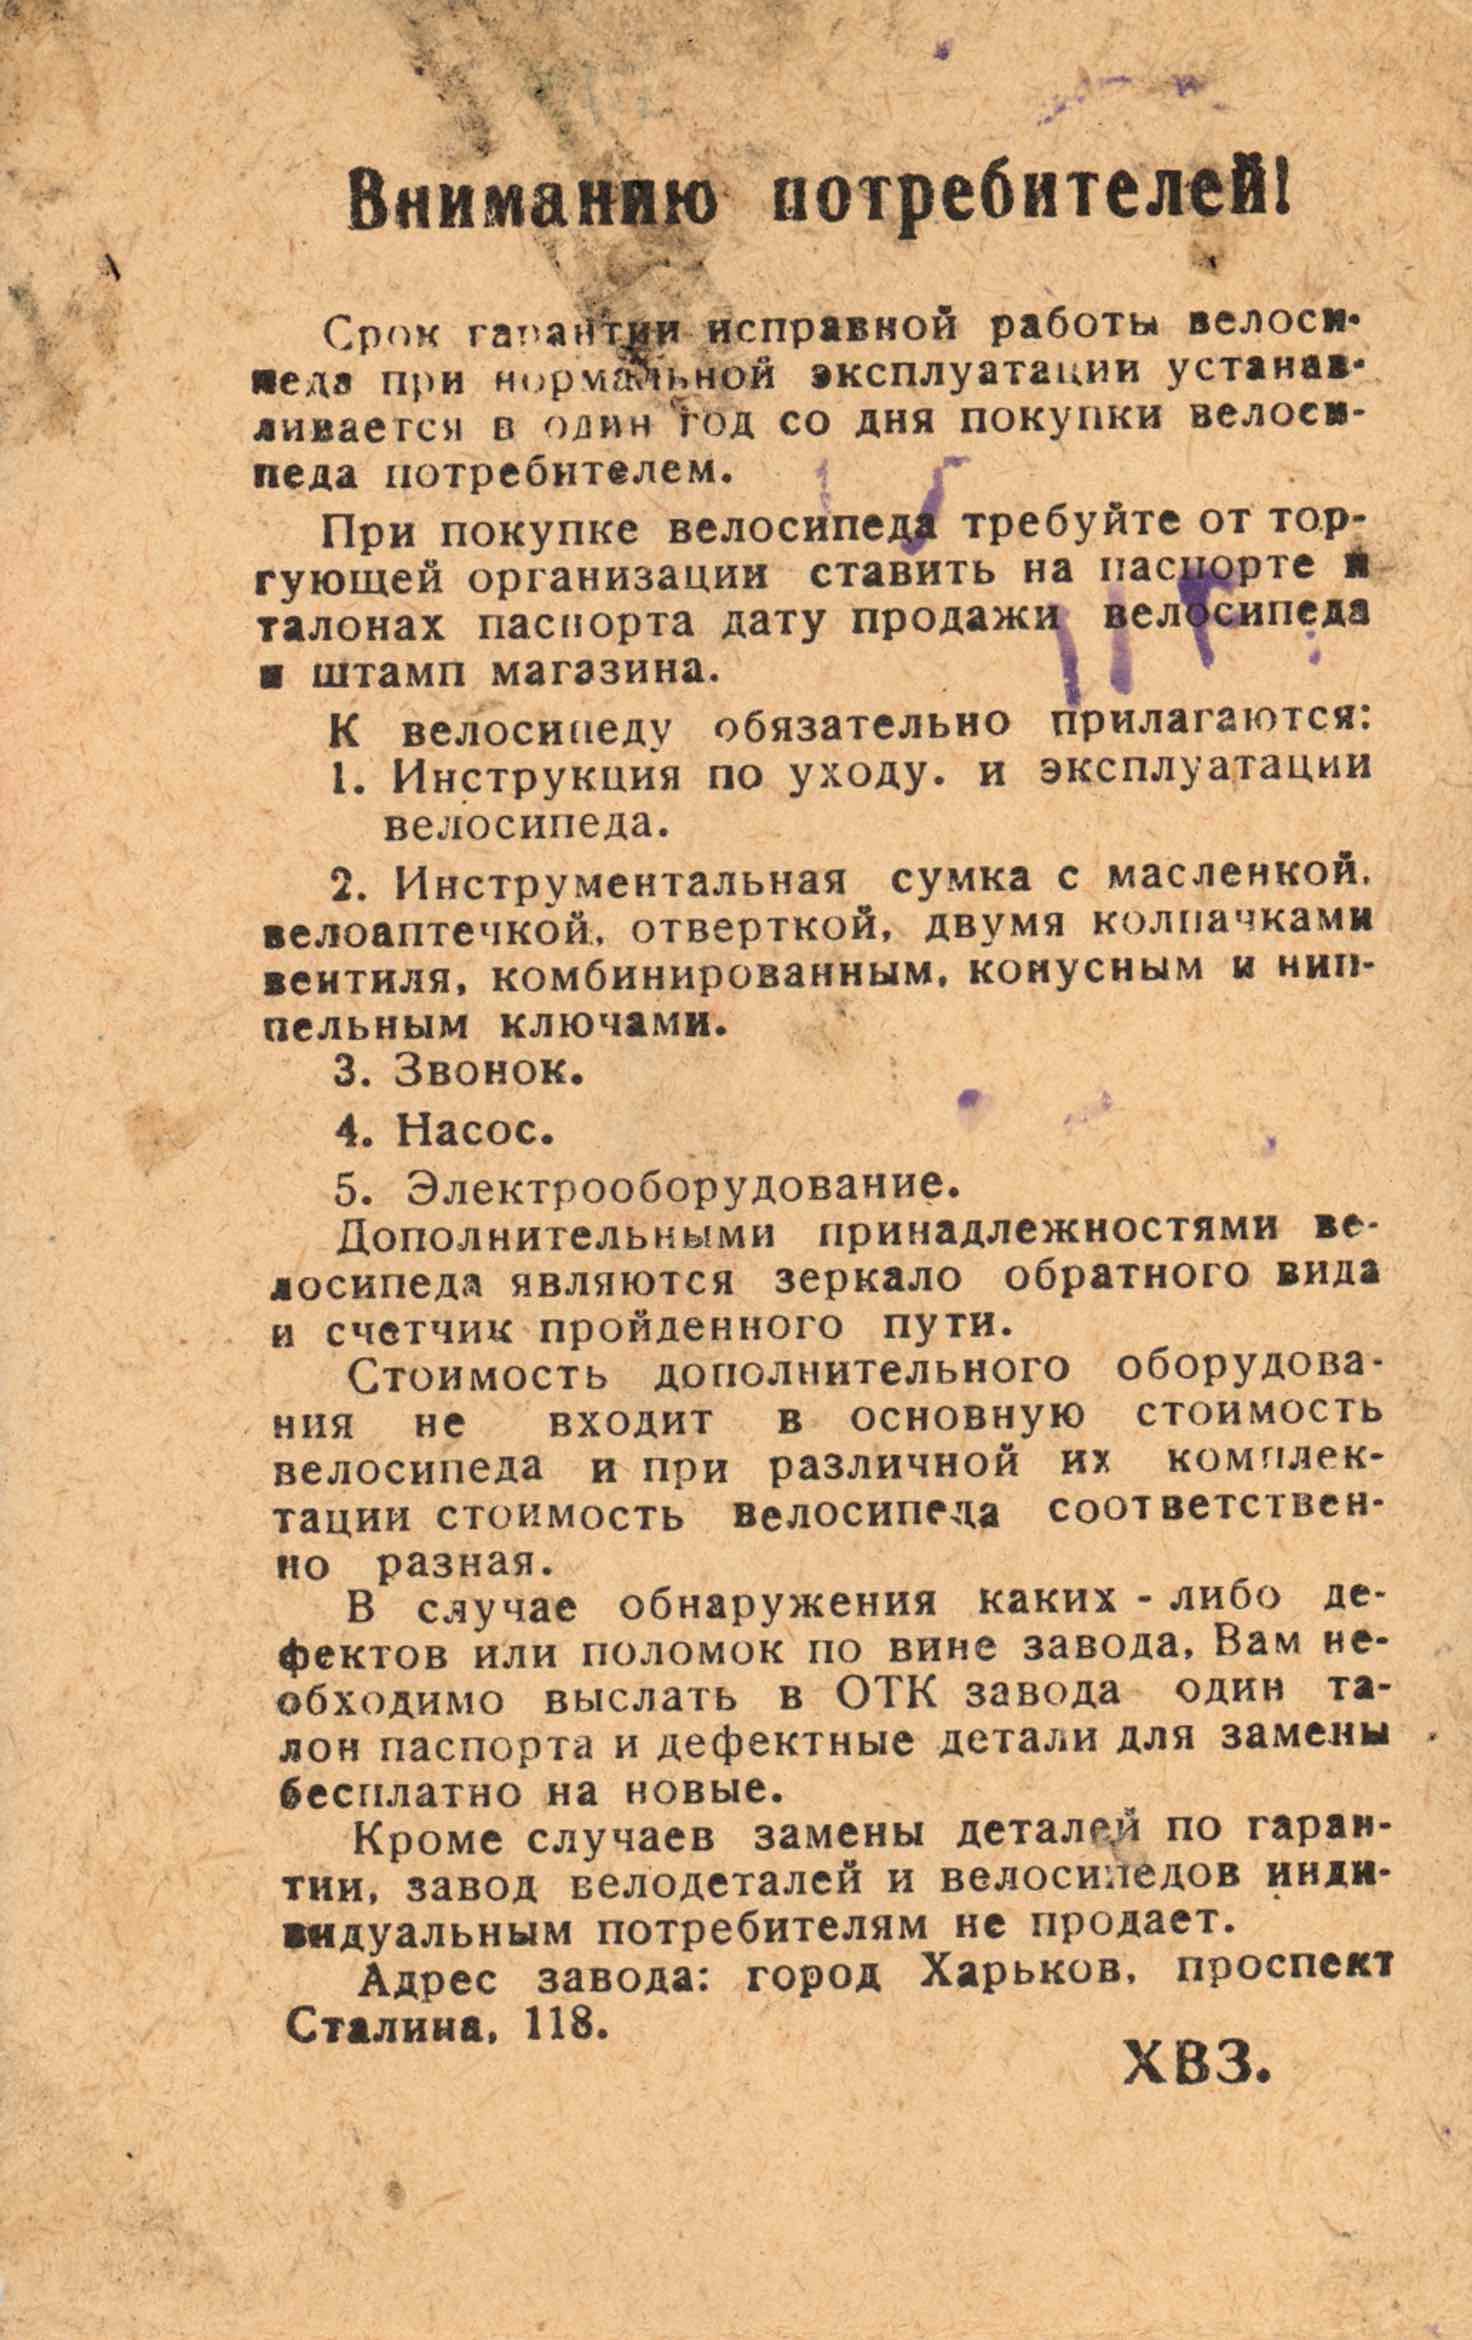 Kharkov - Pasport Velocipeda B-33 1960 scan 2 main image